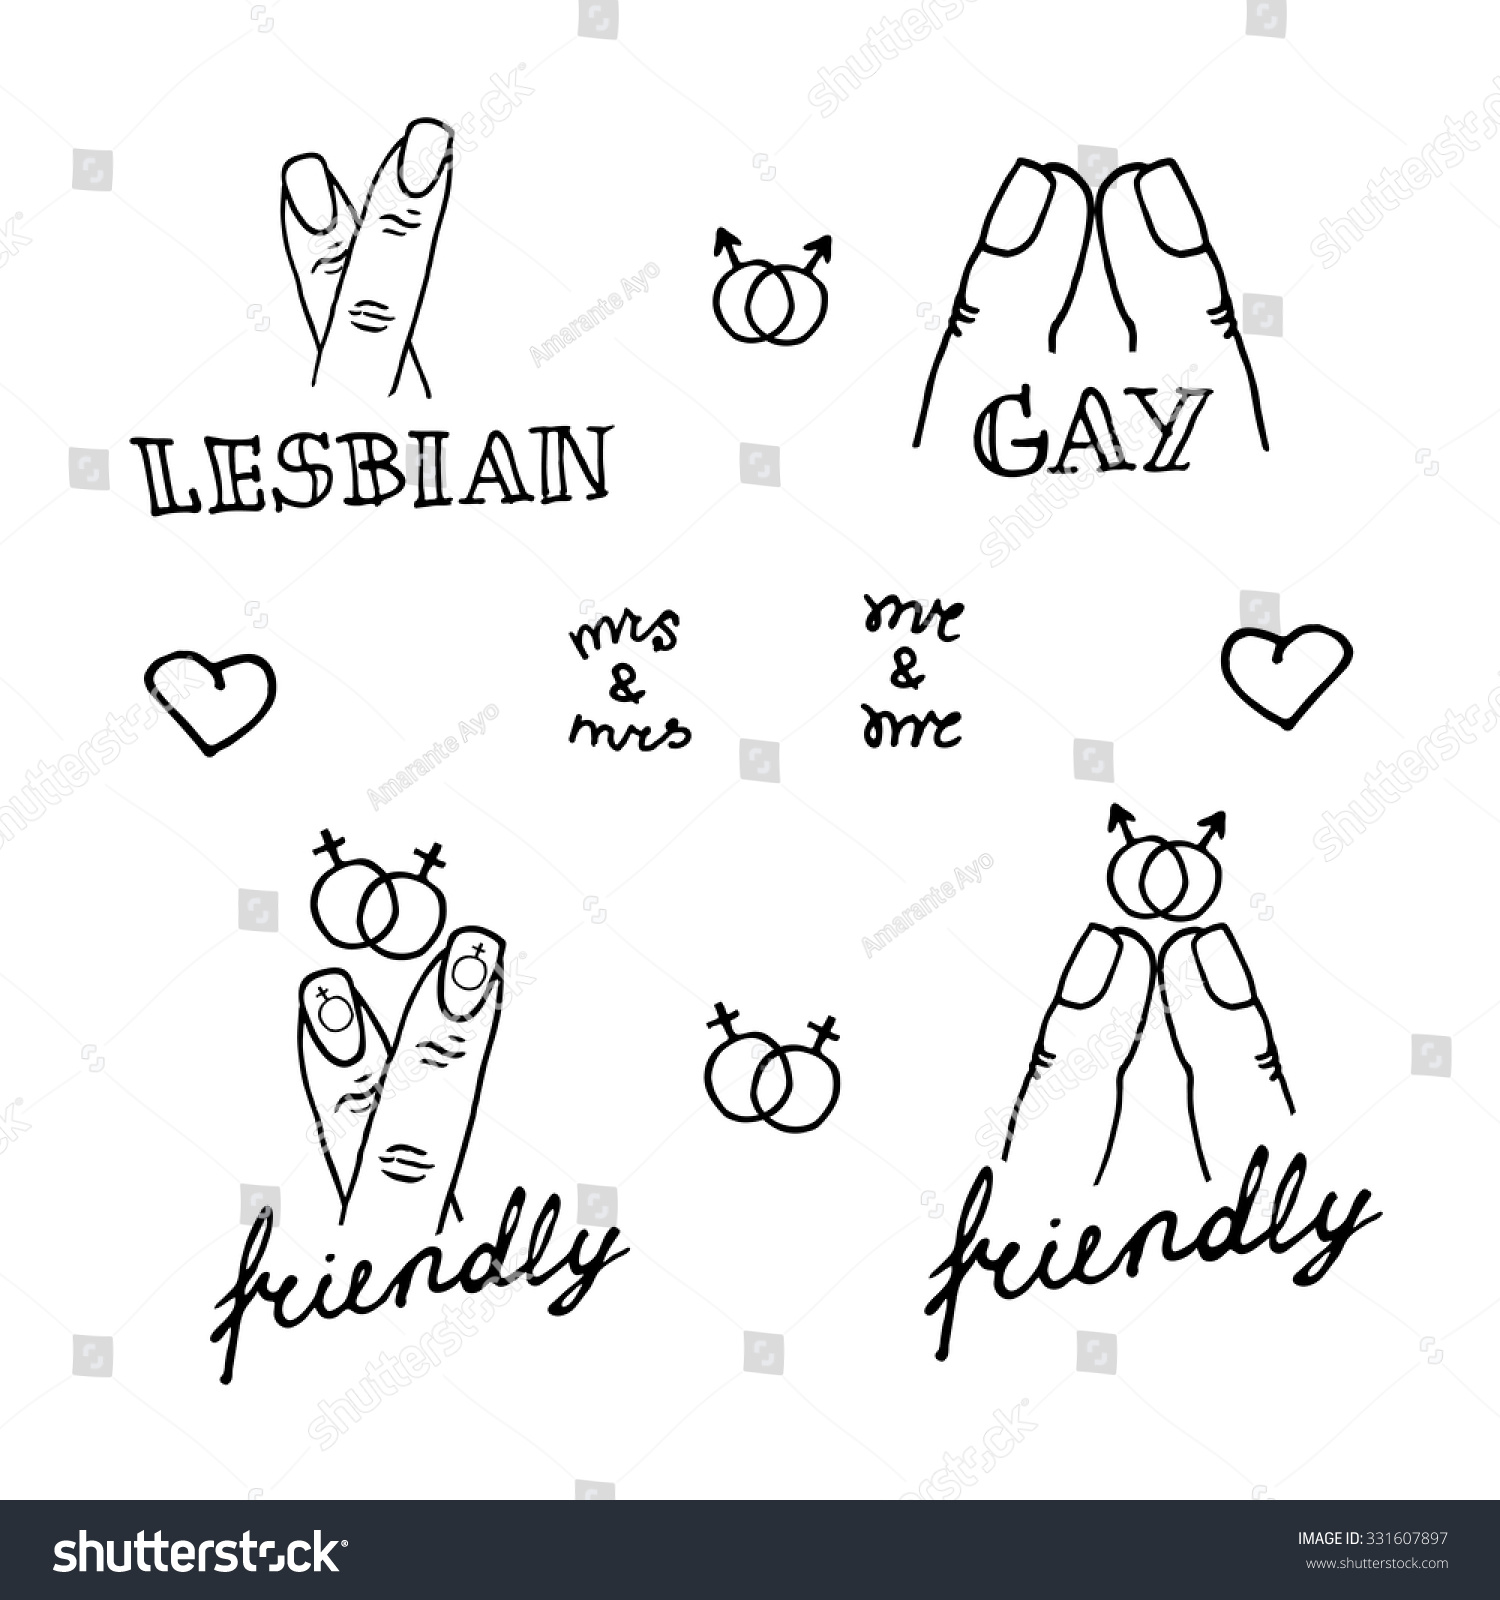 Lesbian Hand Signals 74